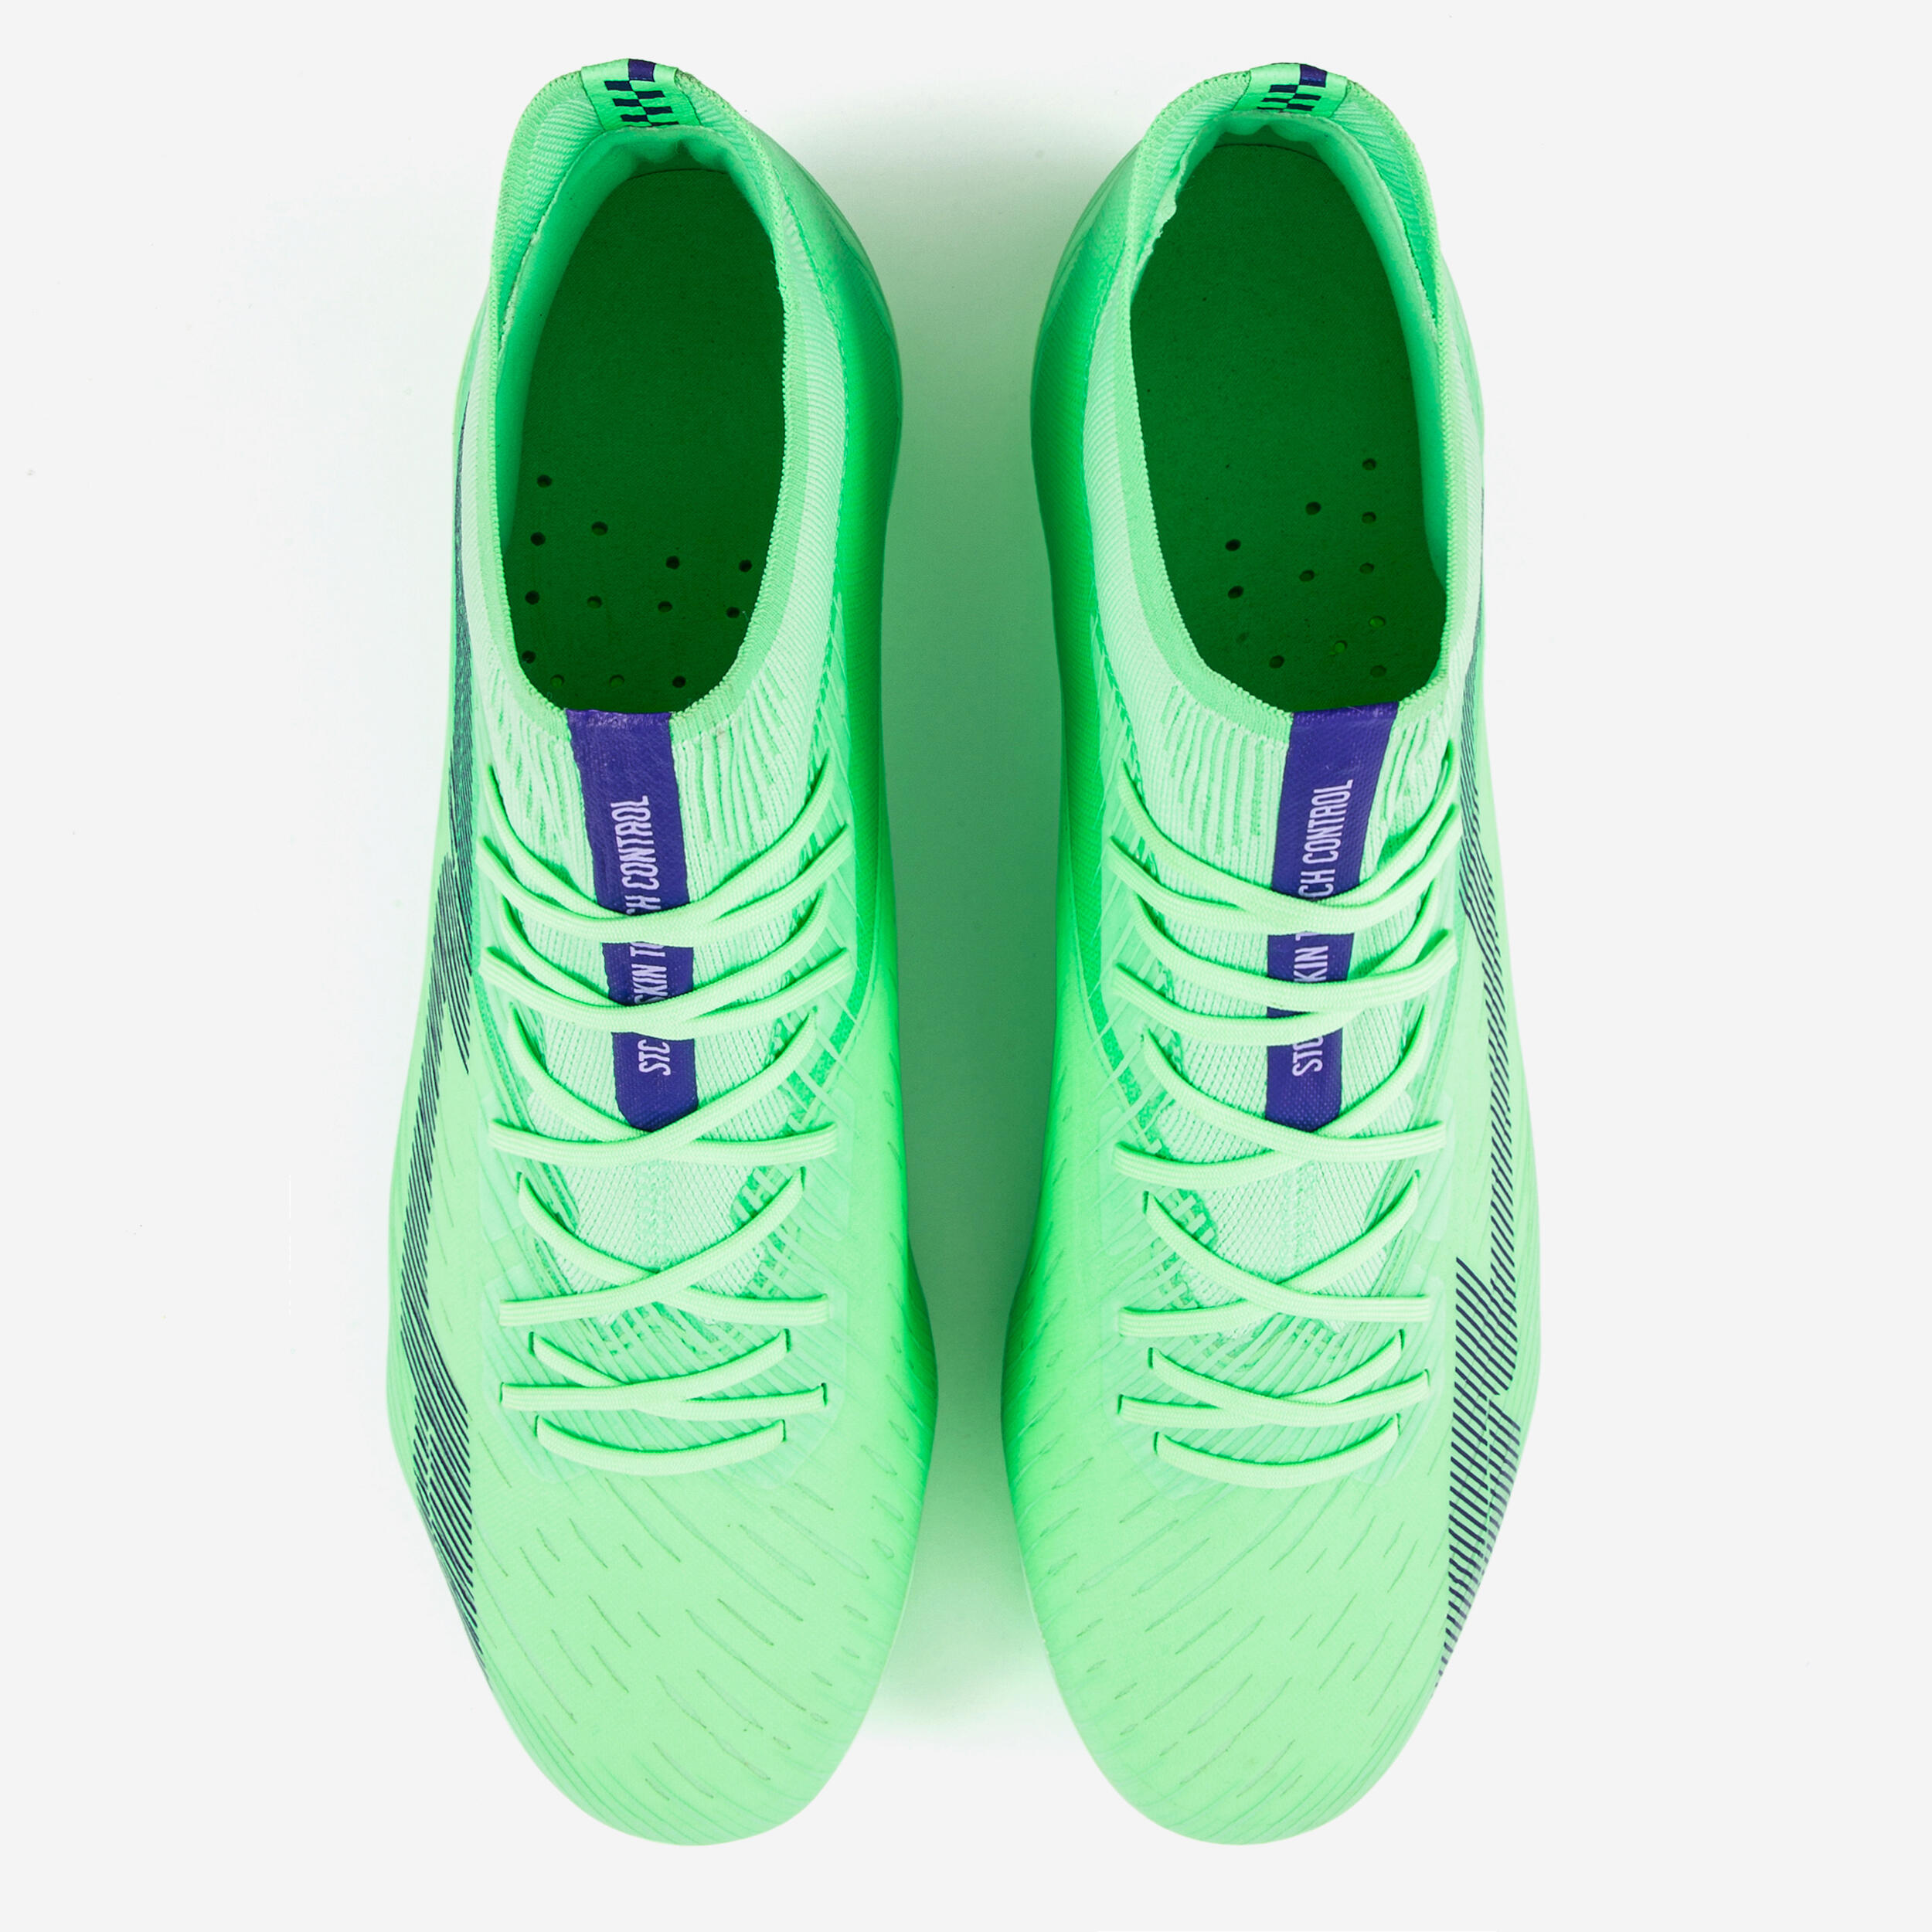 Adult Firm Ground Football Boots CLR - Neon Green Speed 5/6